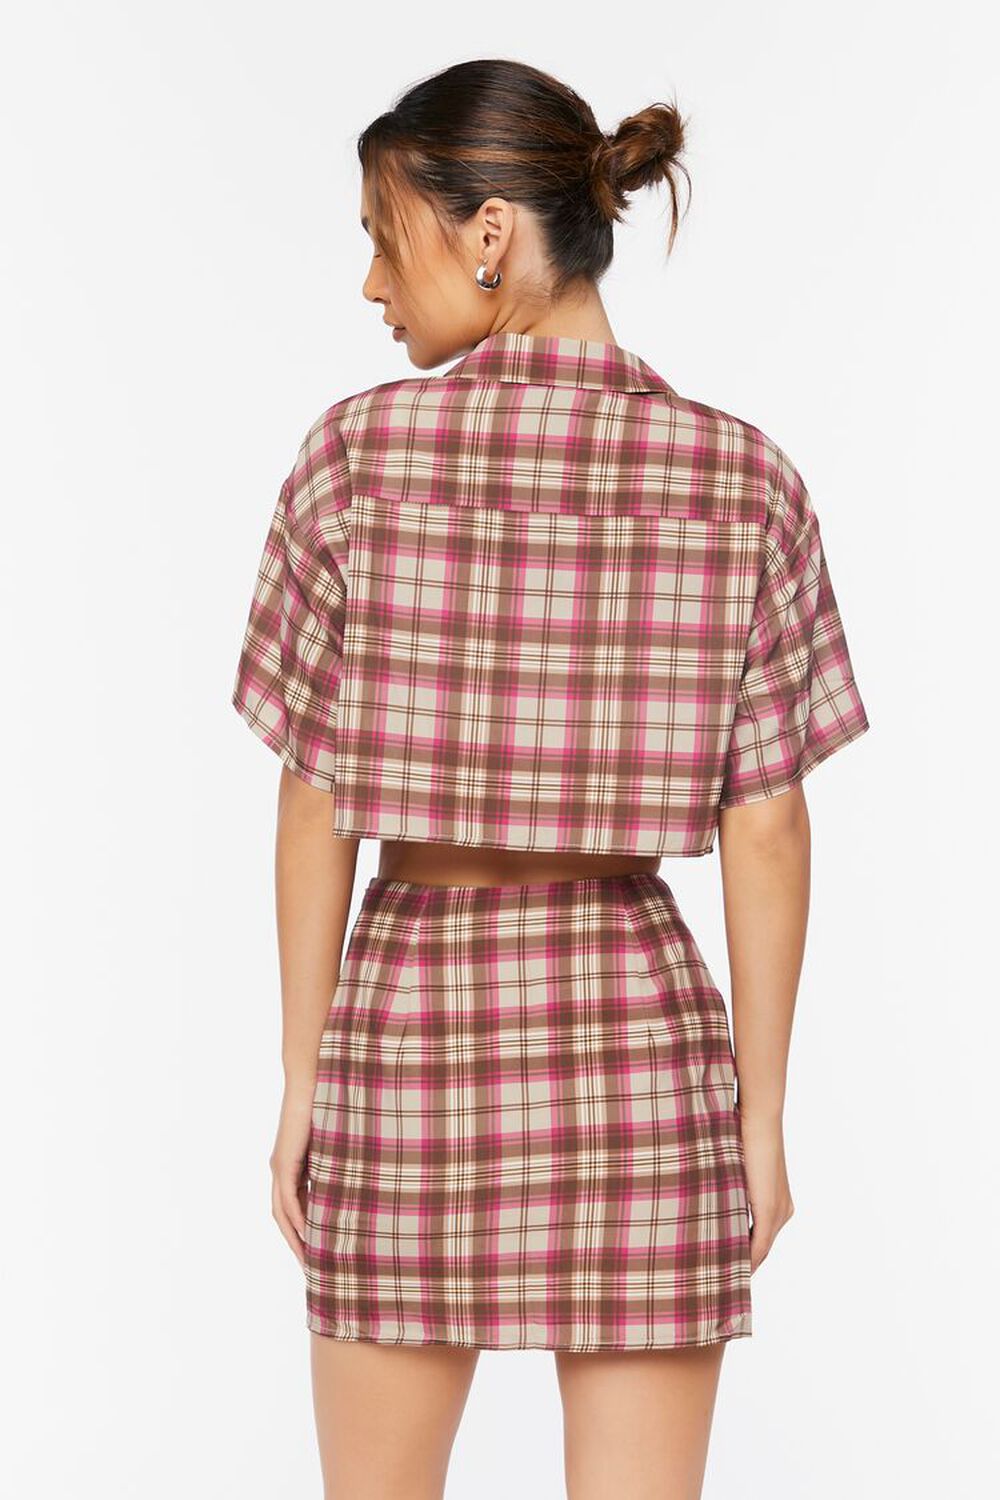 TAN/MULTI Plaid Cropped Shirt & Skirt Set, image 3